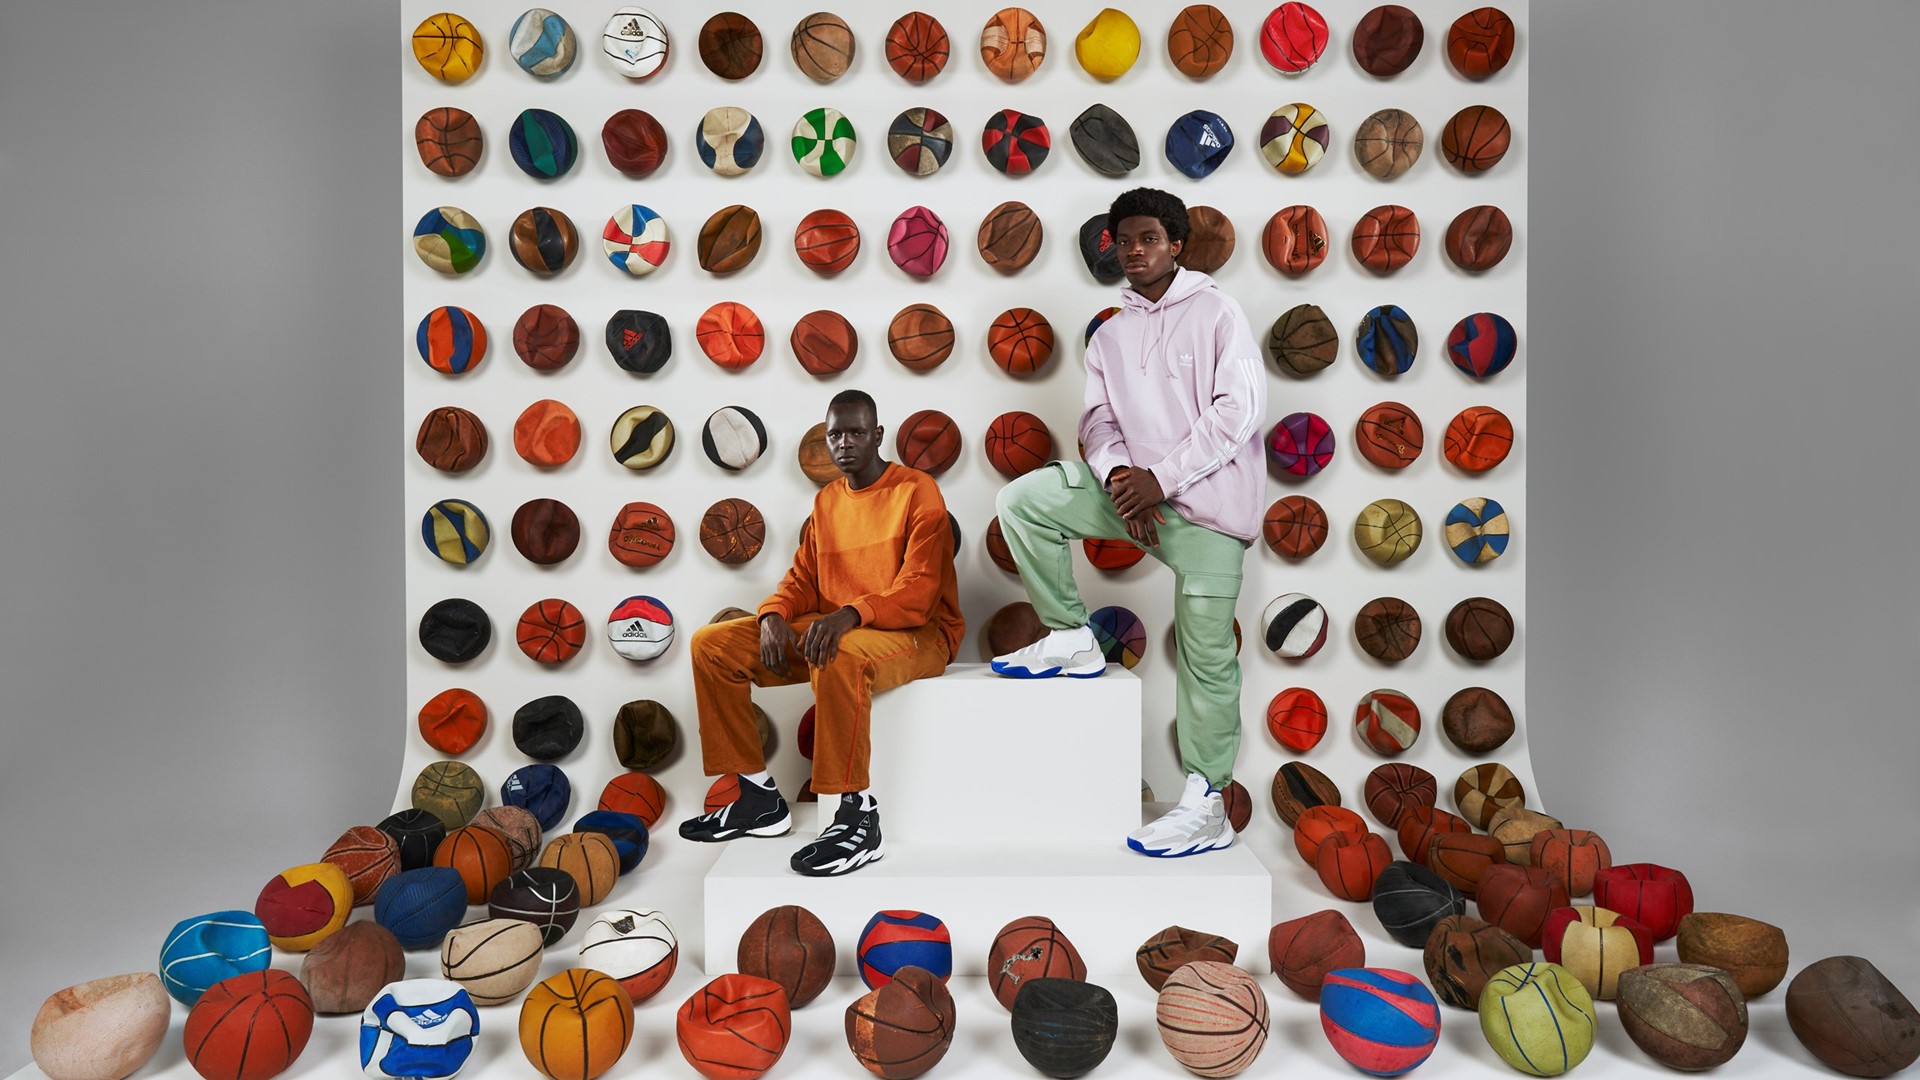 The adidas Originals x Pharrell Williams' collaboration color